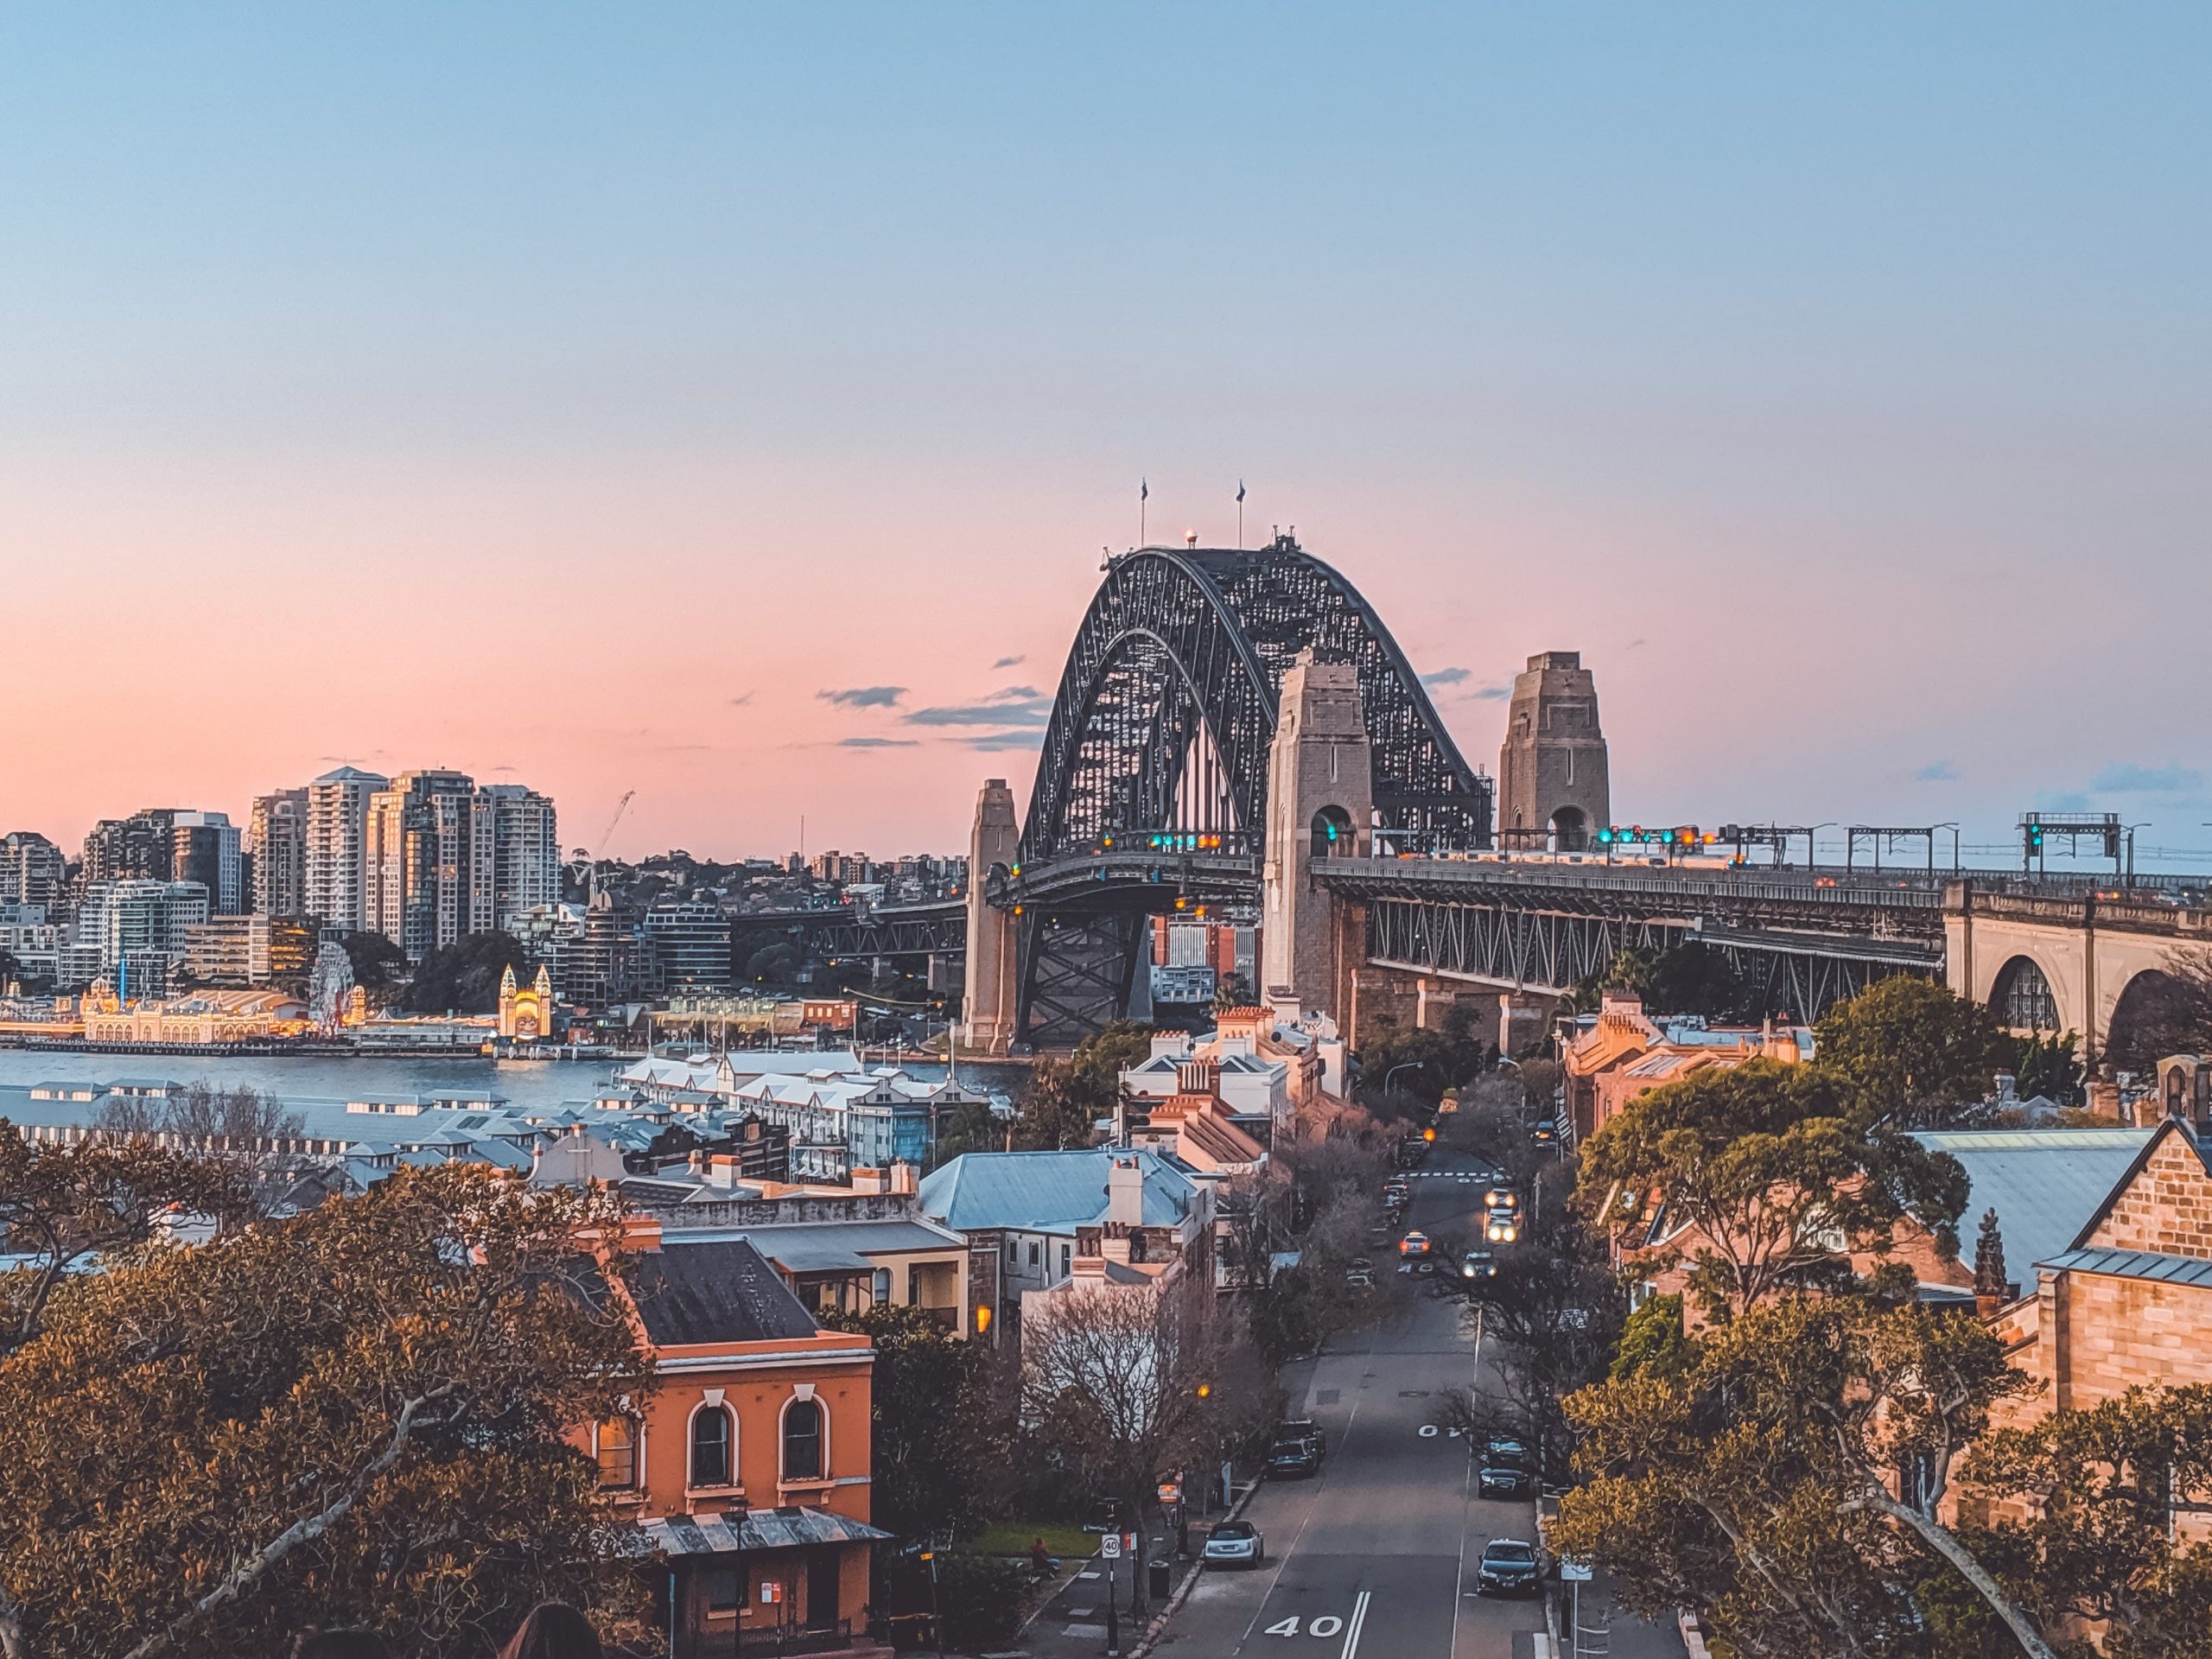 Sydney Harbour Bridge at Sunset for Brads Backpack travel guide